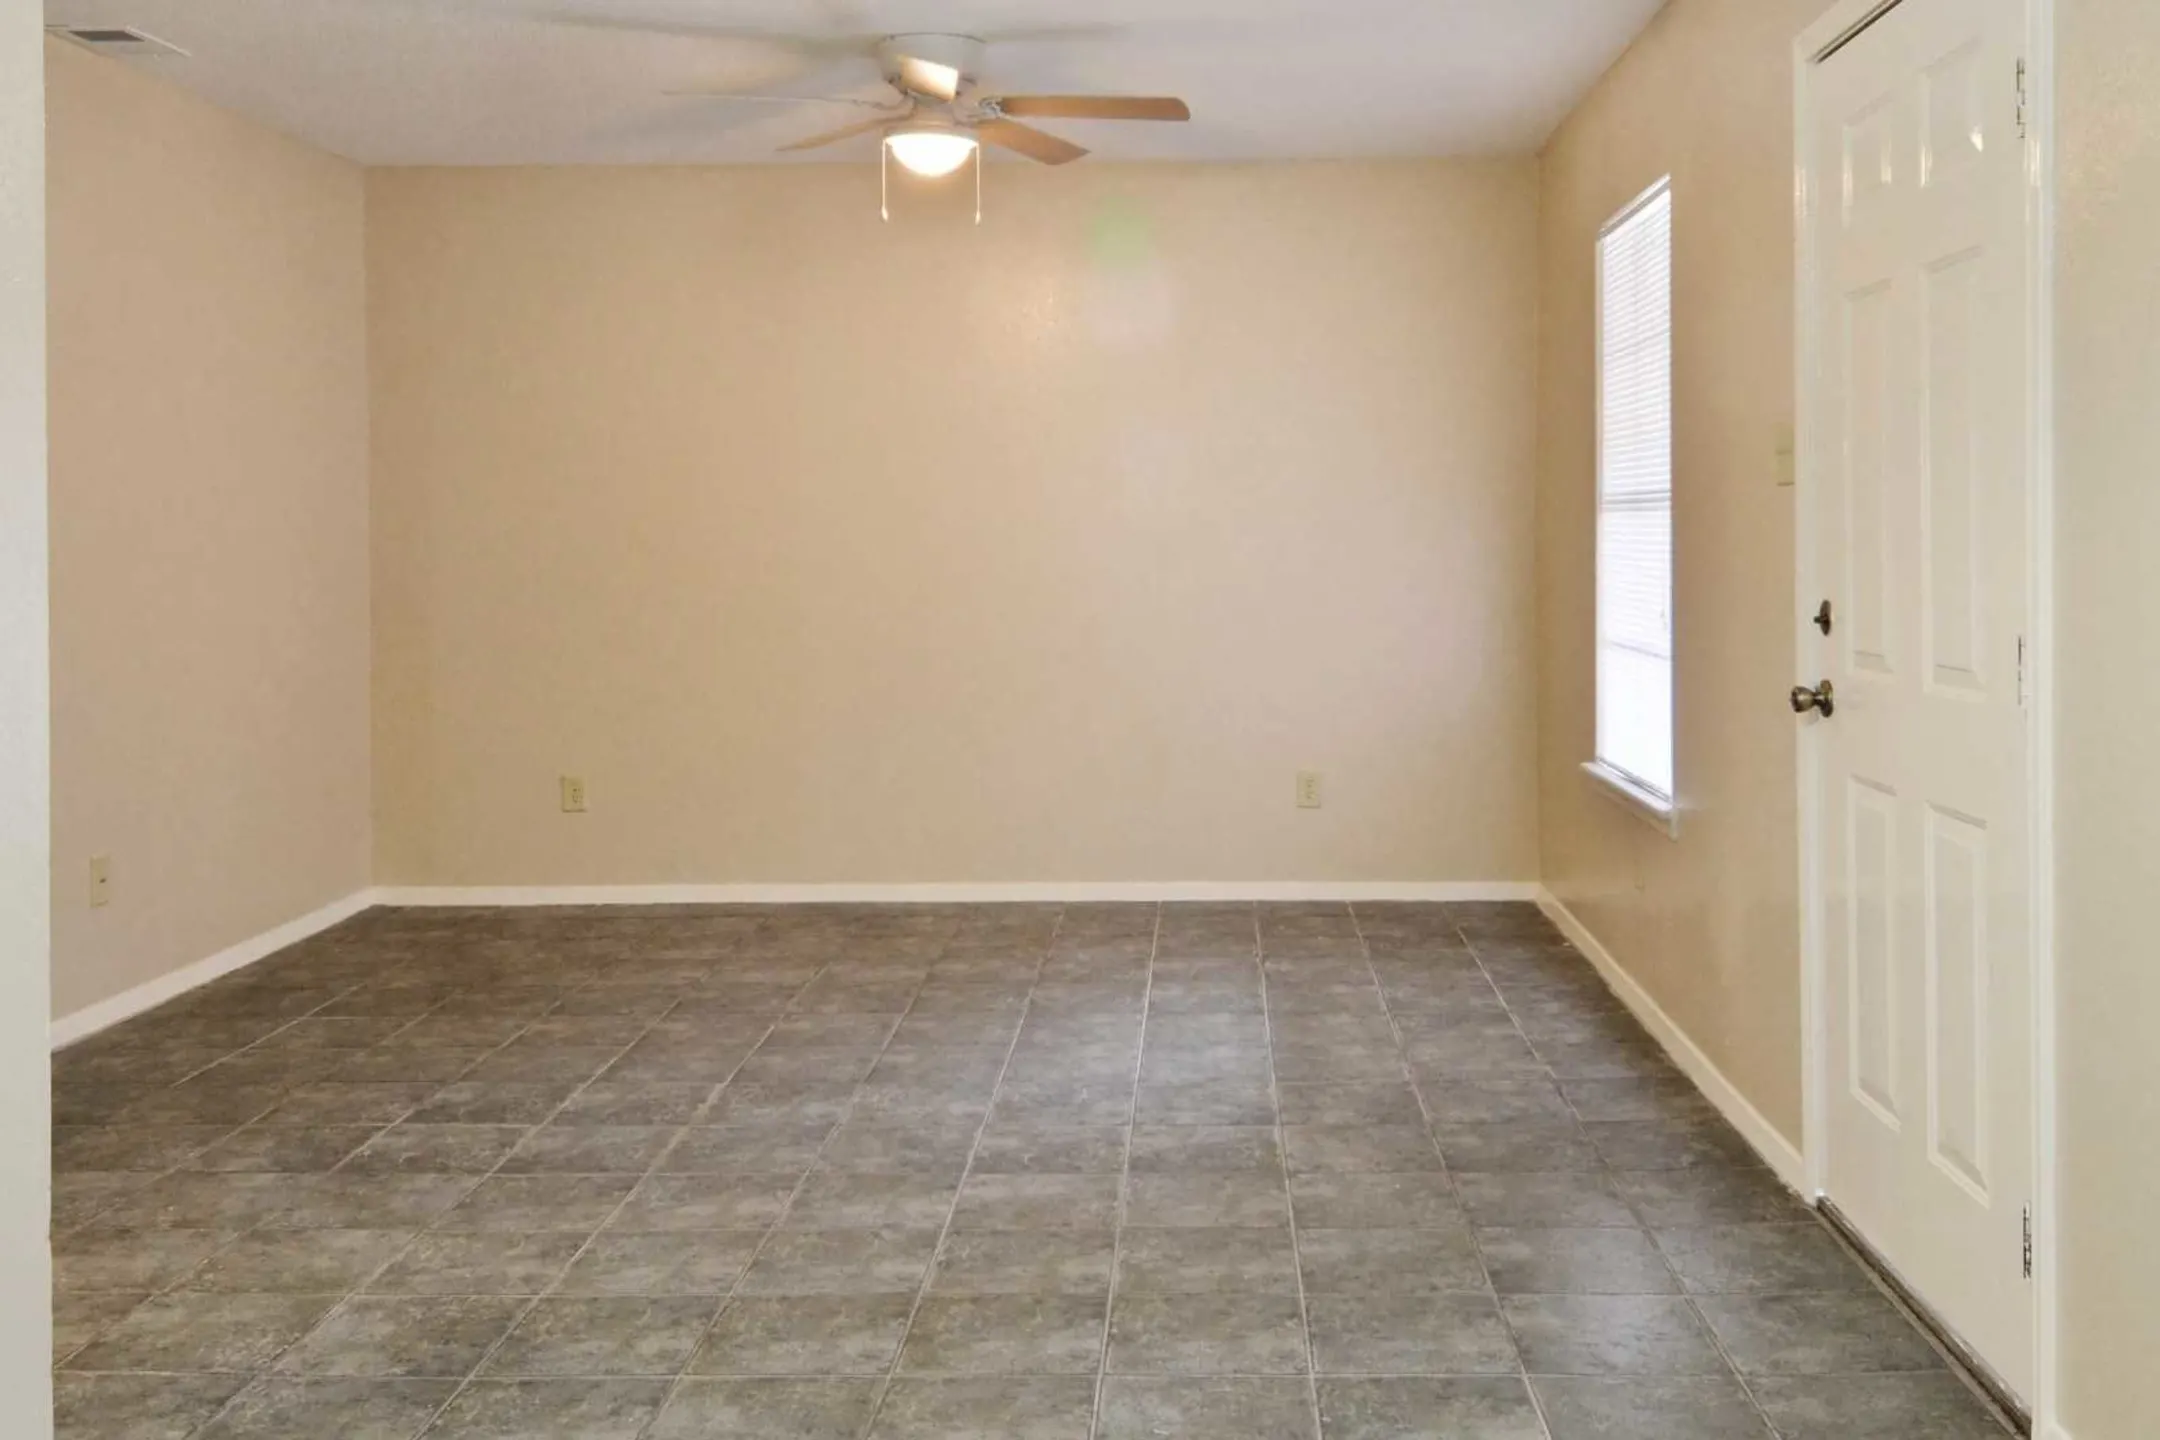 Living Room - Crossings Apartments - McAllen, TX